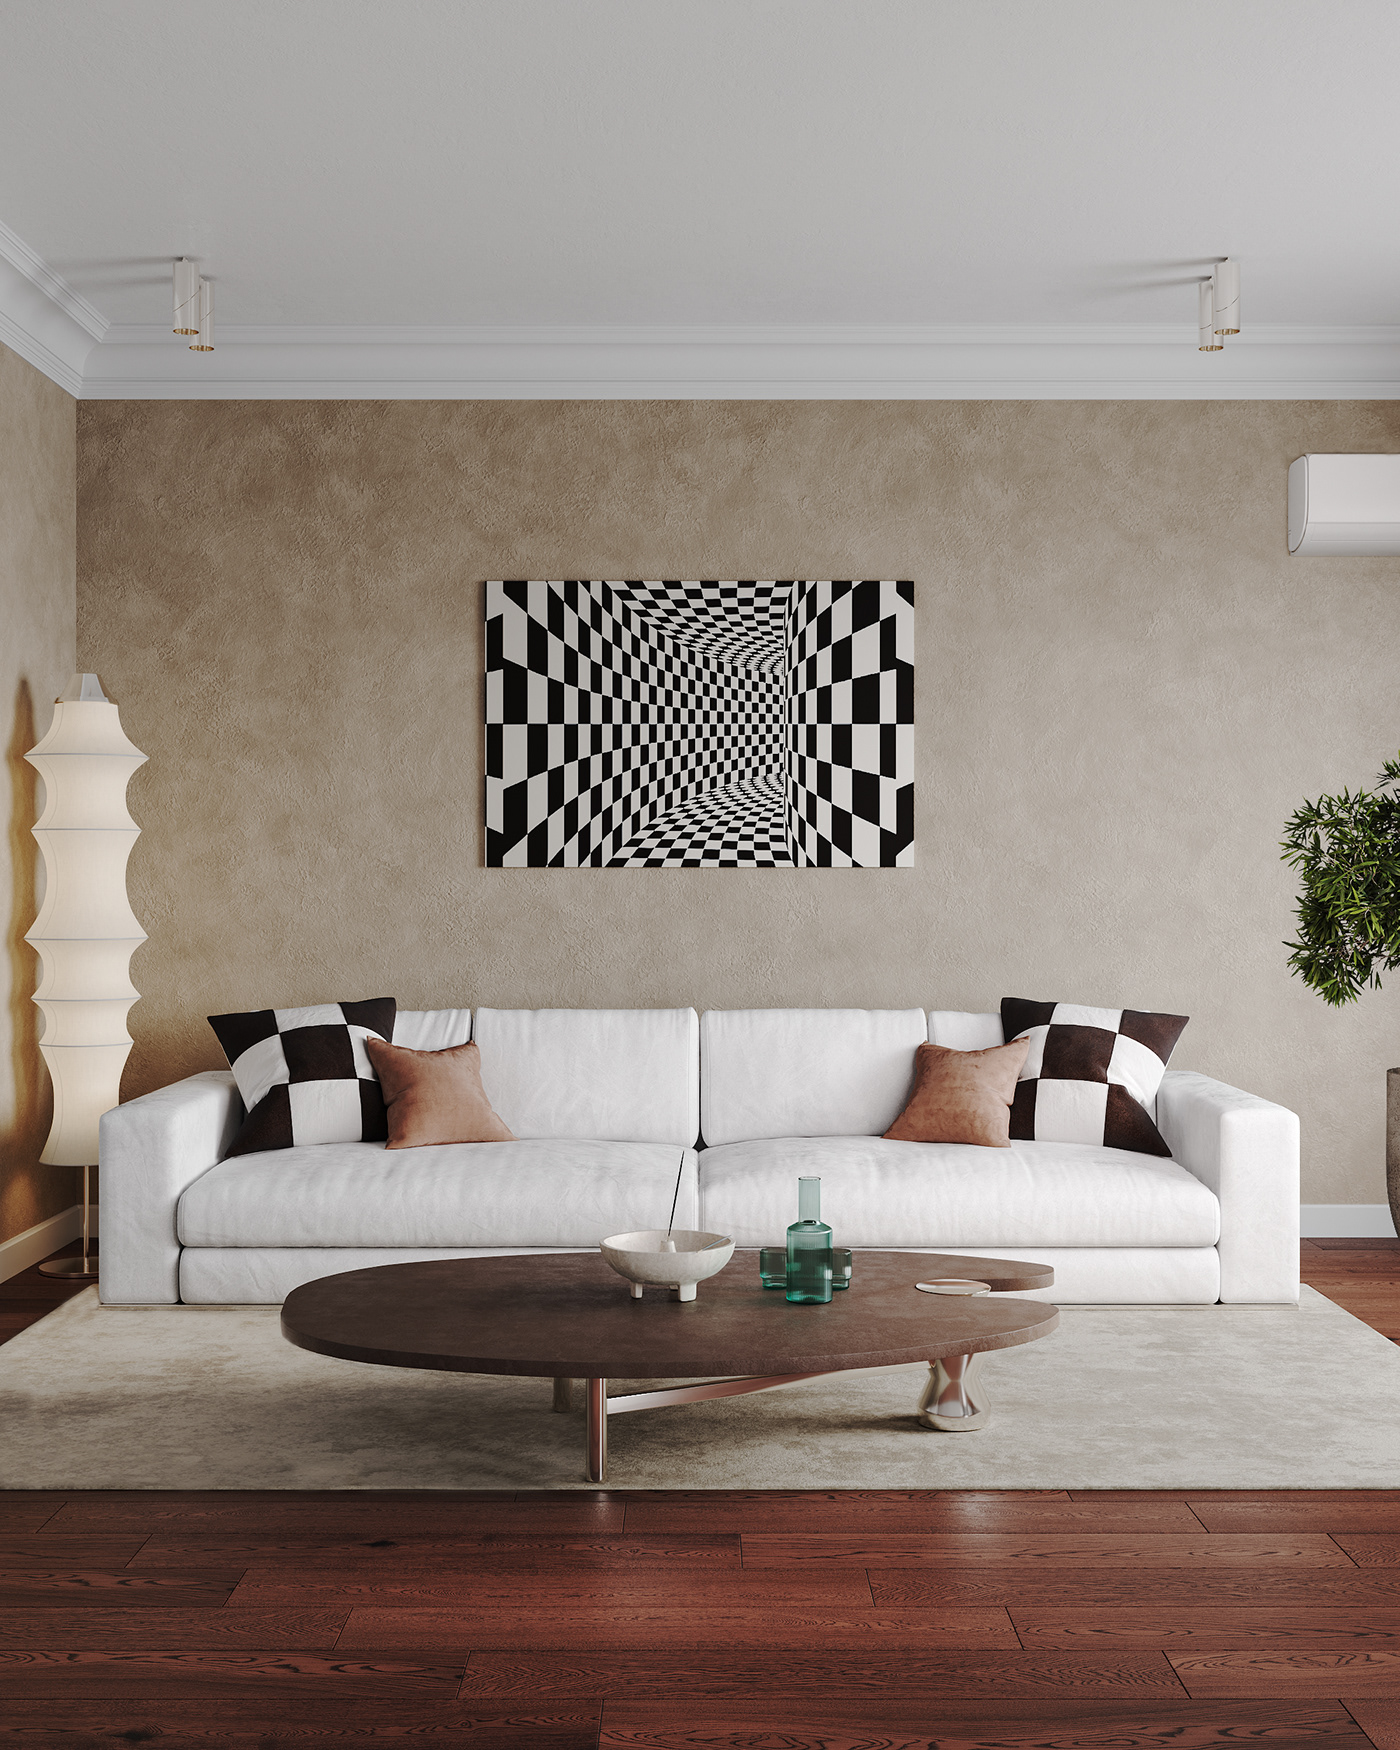 3D 3ds max architecture corona interior design  kithcen living room Render visualization